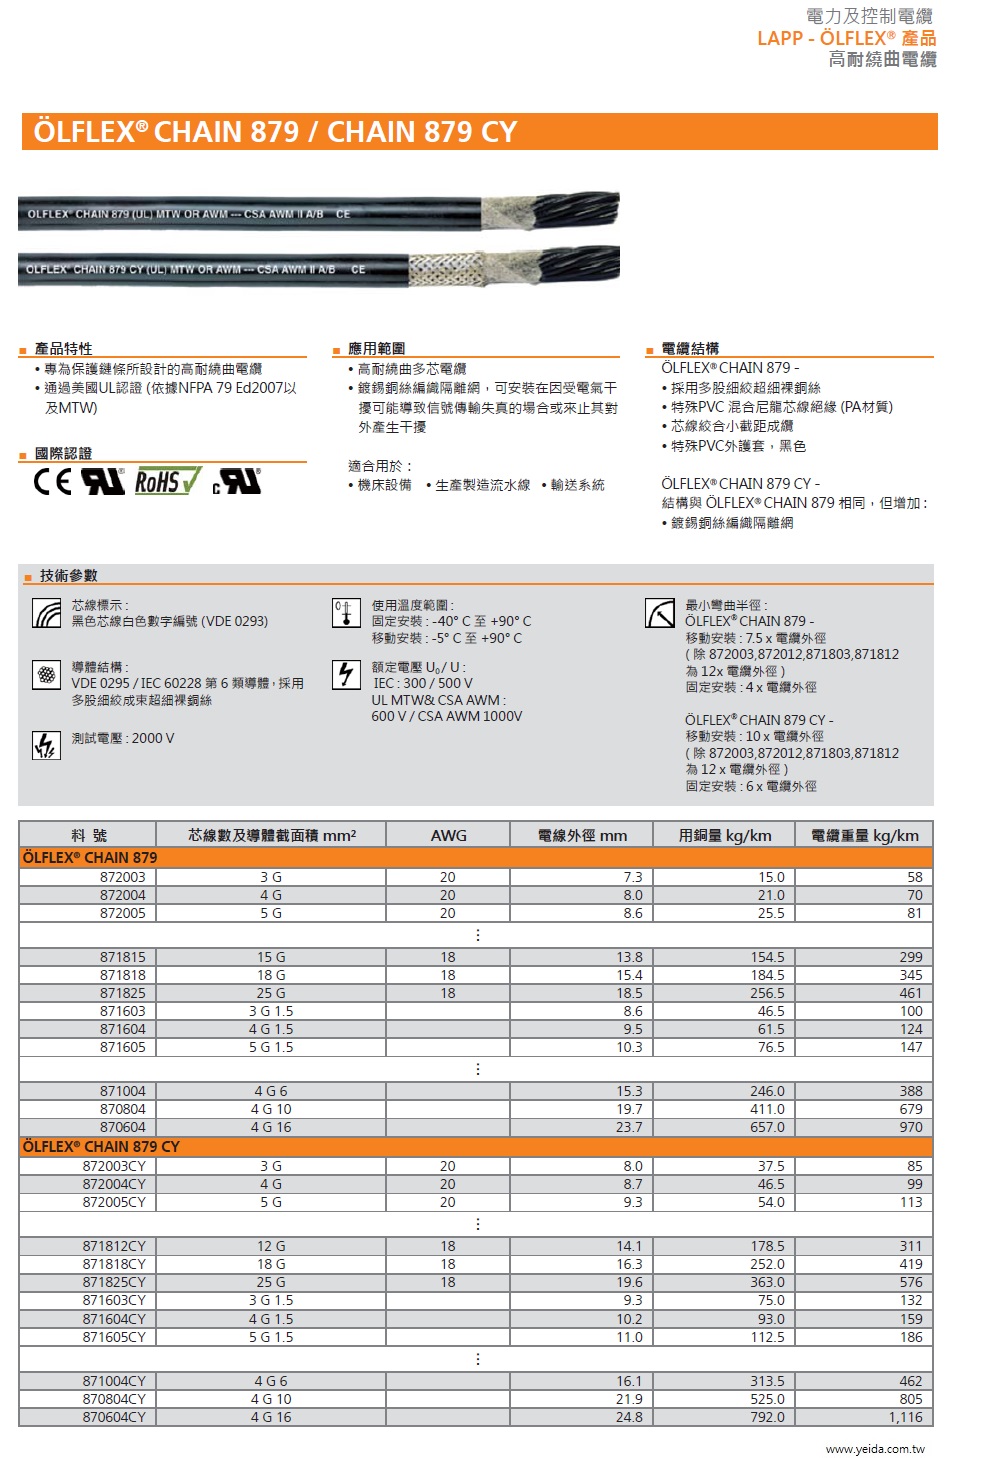 LAPP- OLFLEX CHAIN 879 CY 工業級(超柔移動式防水防油污耐磨損鍍錫銅網隔離)連接線 Screened, PVC- insulated, numbered, PVC- outer sheath, approved產品圖